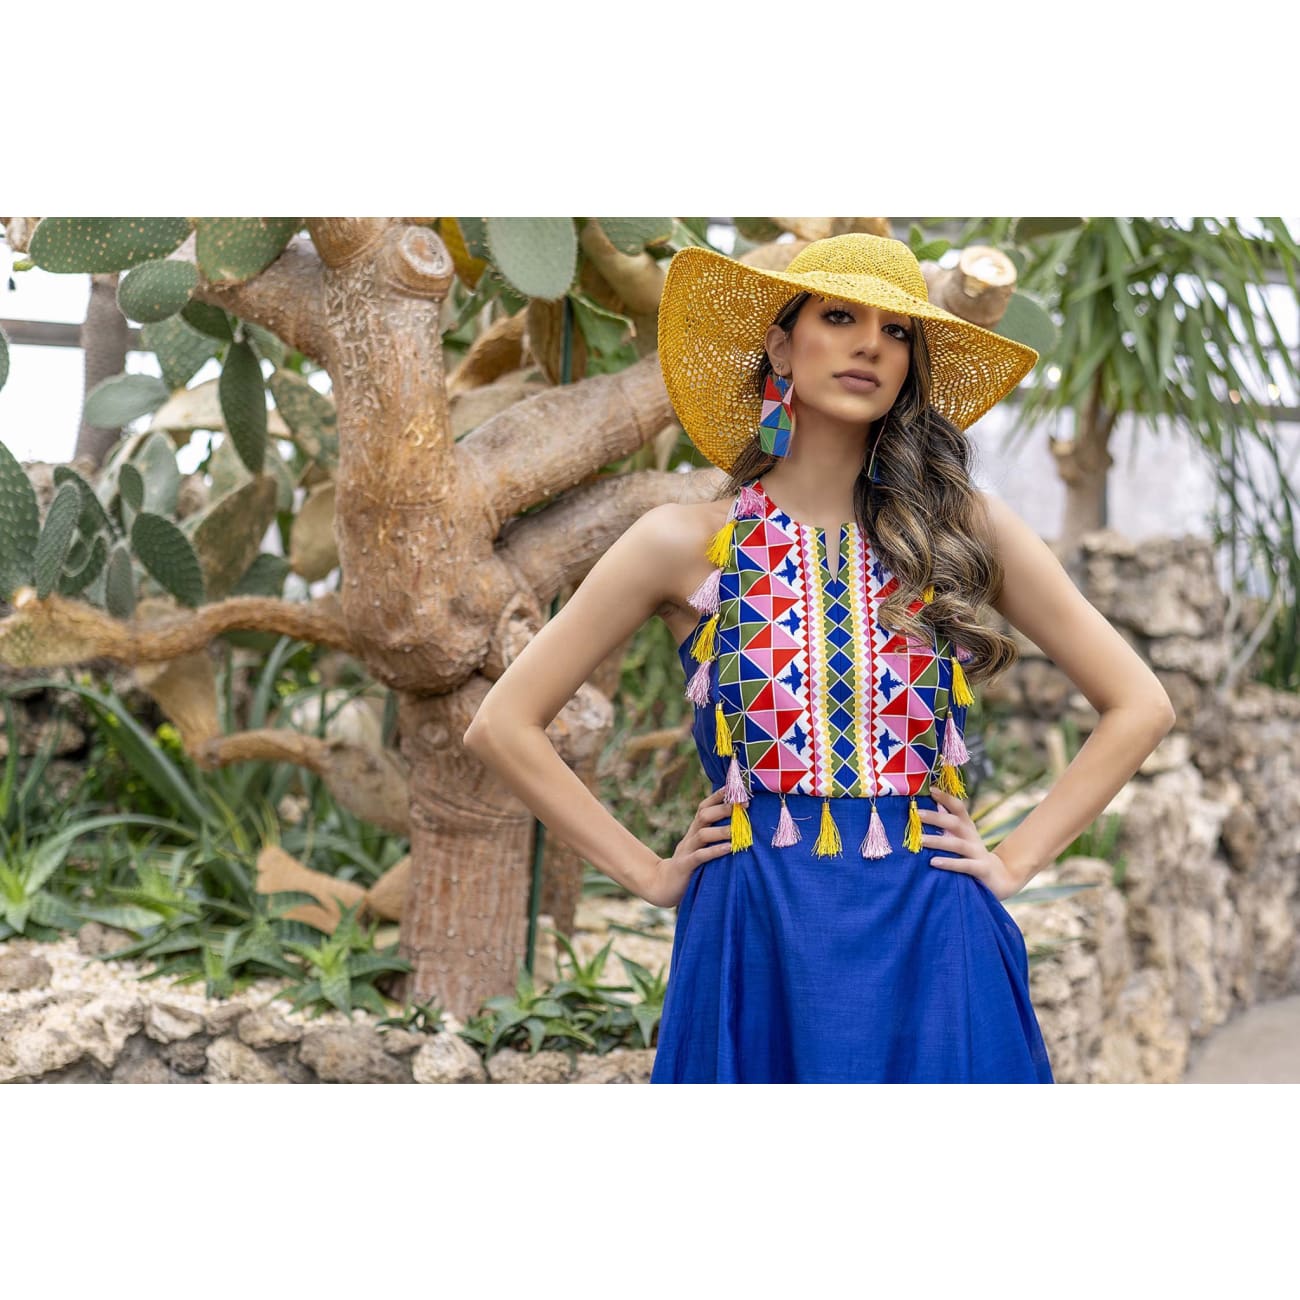 Isa Silk Blue Maxi Dress Dresses Sandhya Garg Free Shipping beach dress Bohemian Bohemian Dress Boho Chic cruise dress